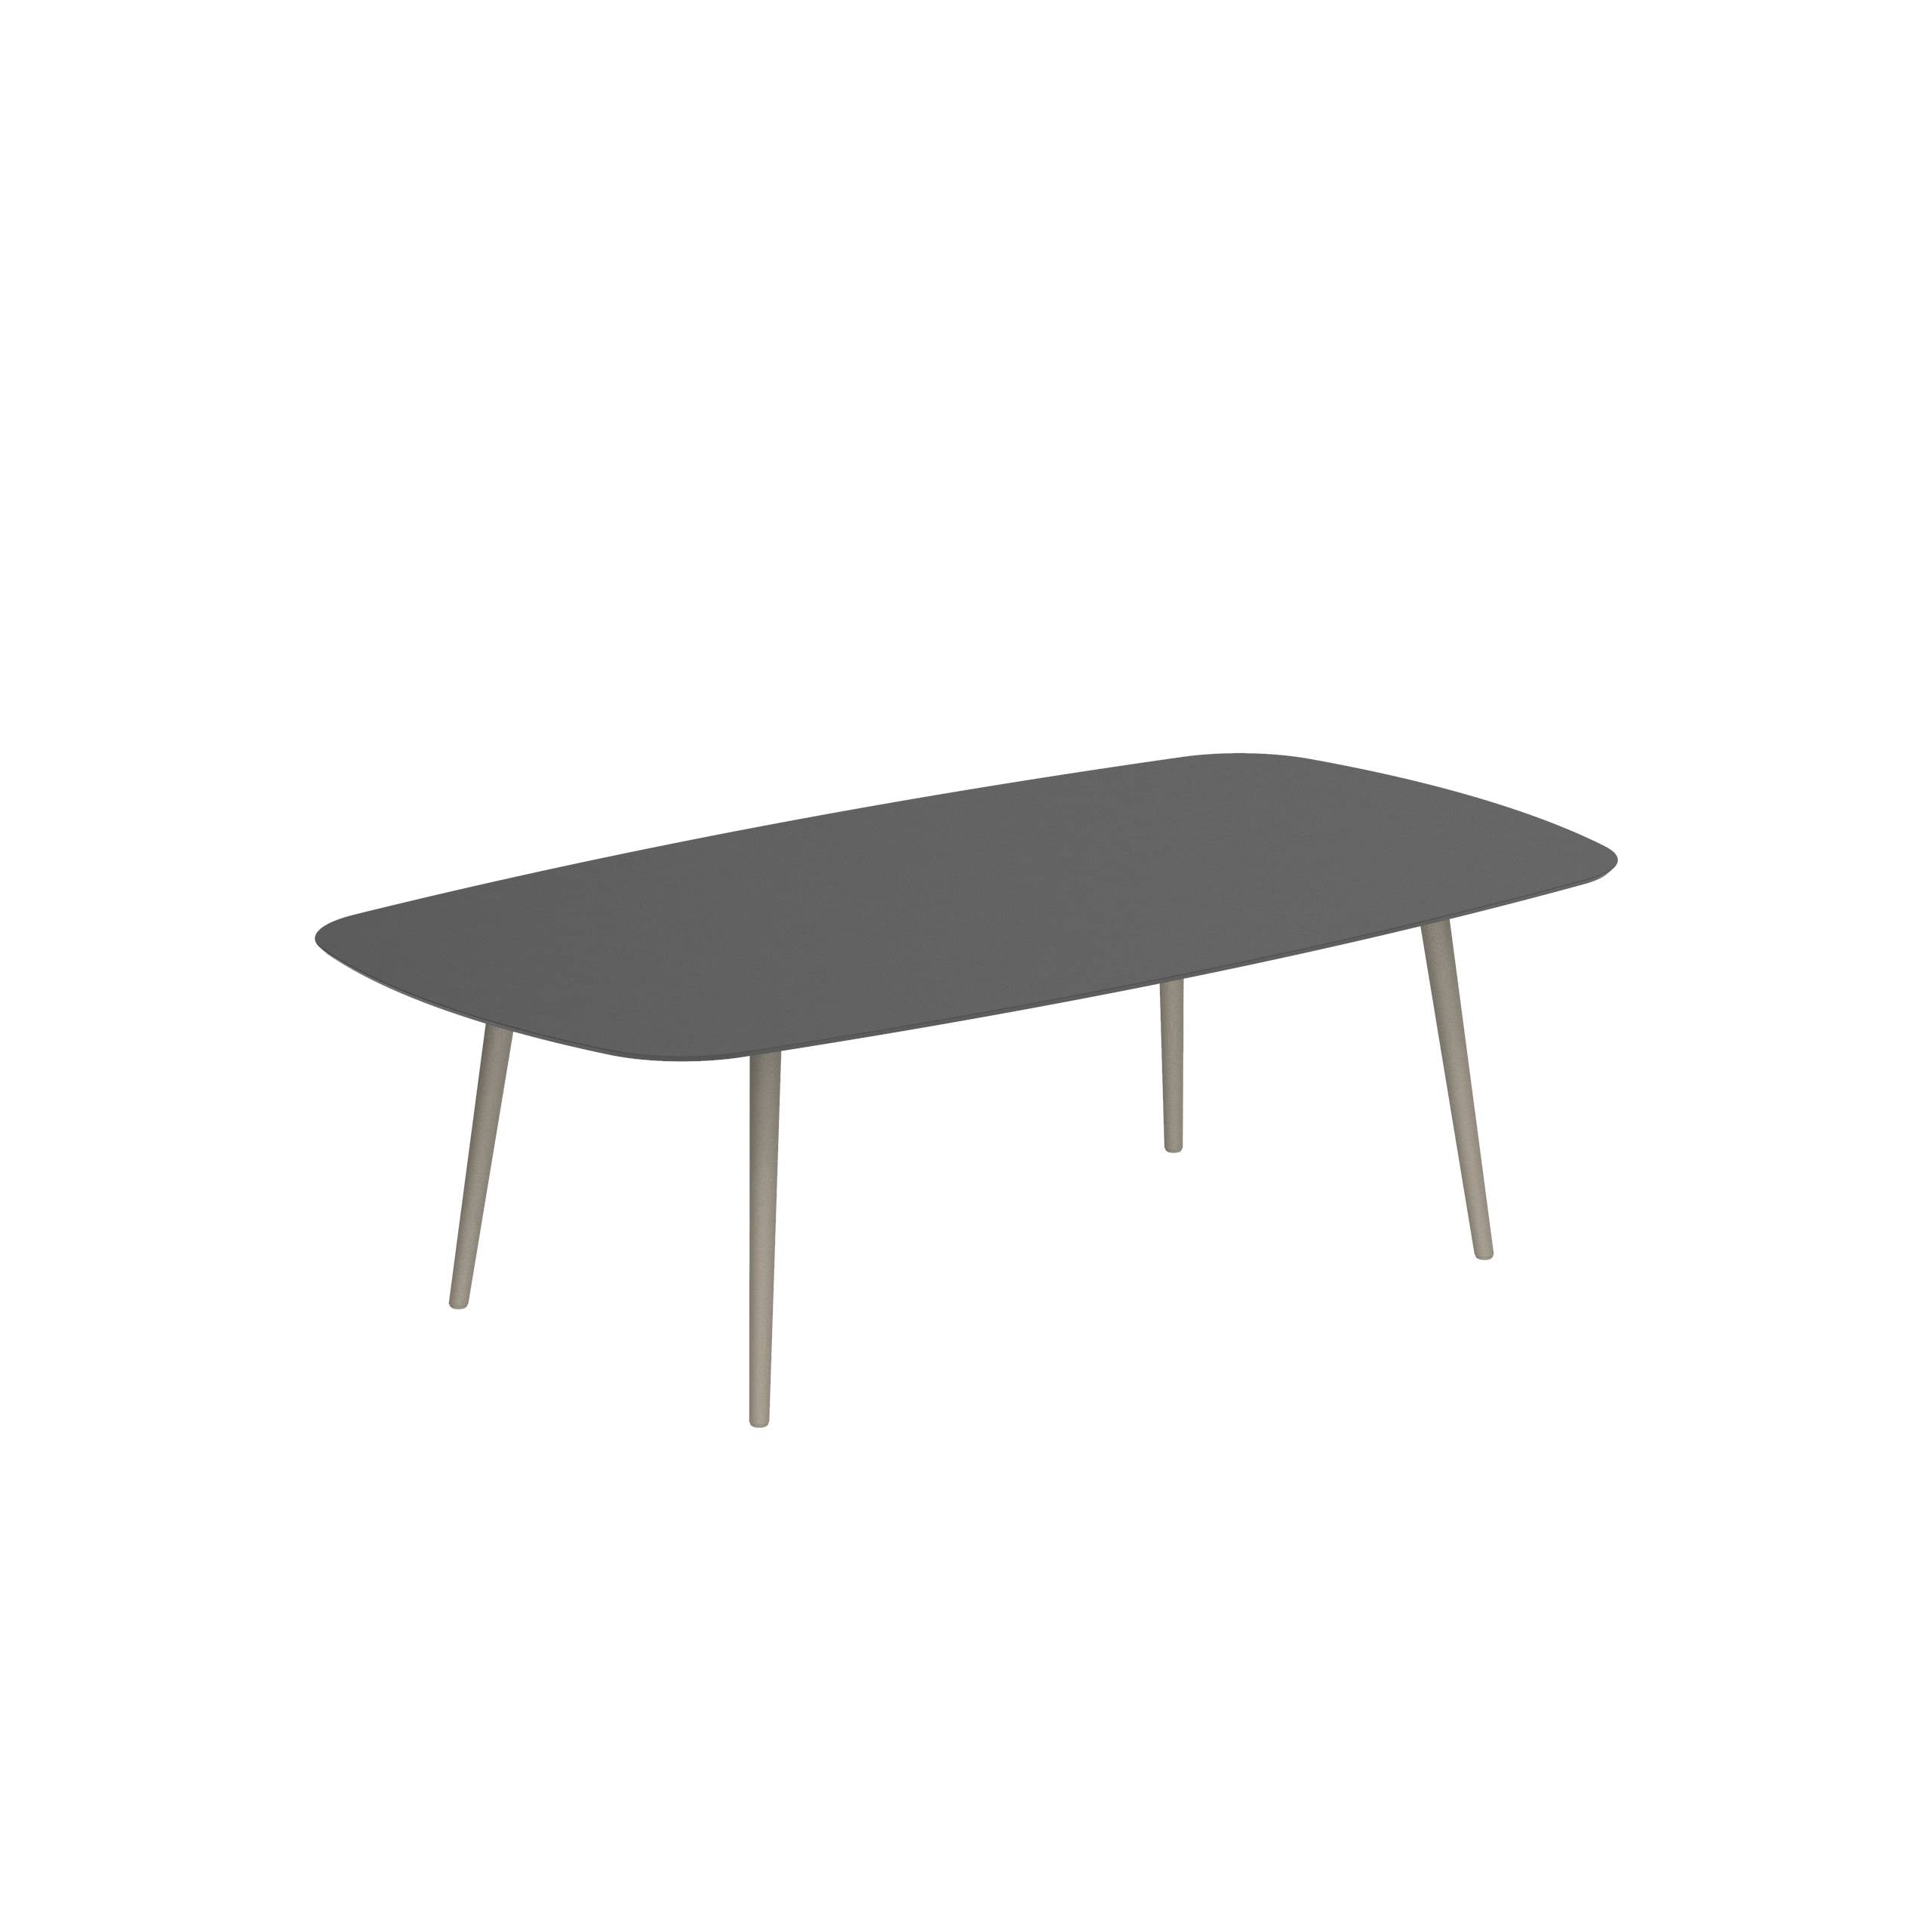 Styletto Low Dining Table 220x120cm Alu Legs Sand Ceramic Tabletop Black